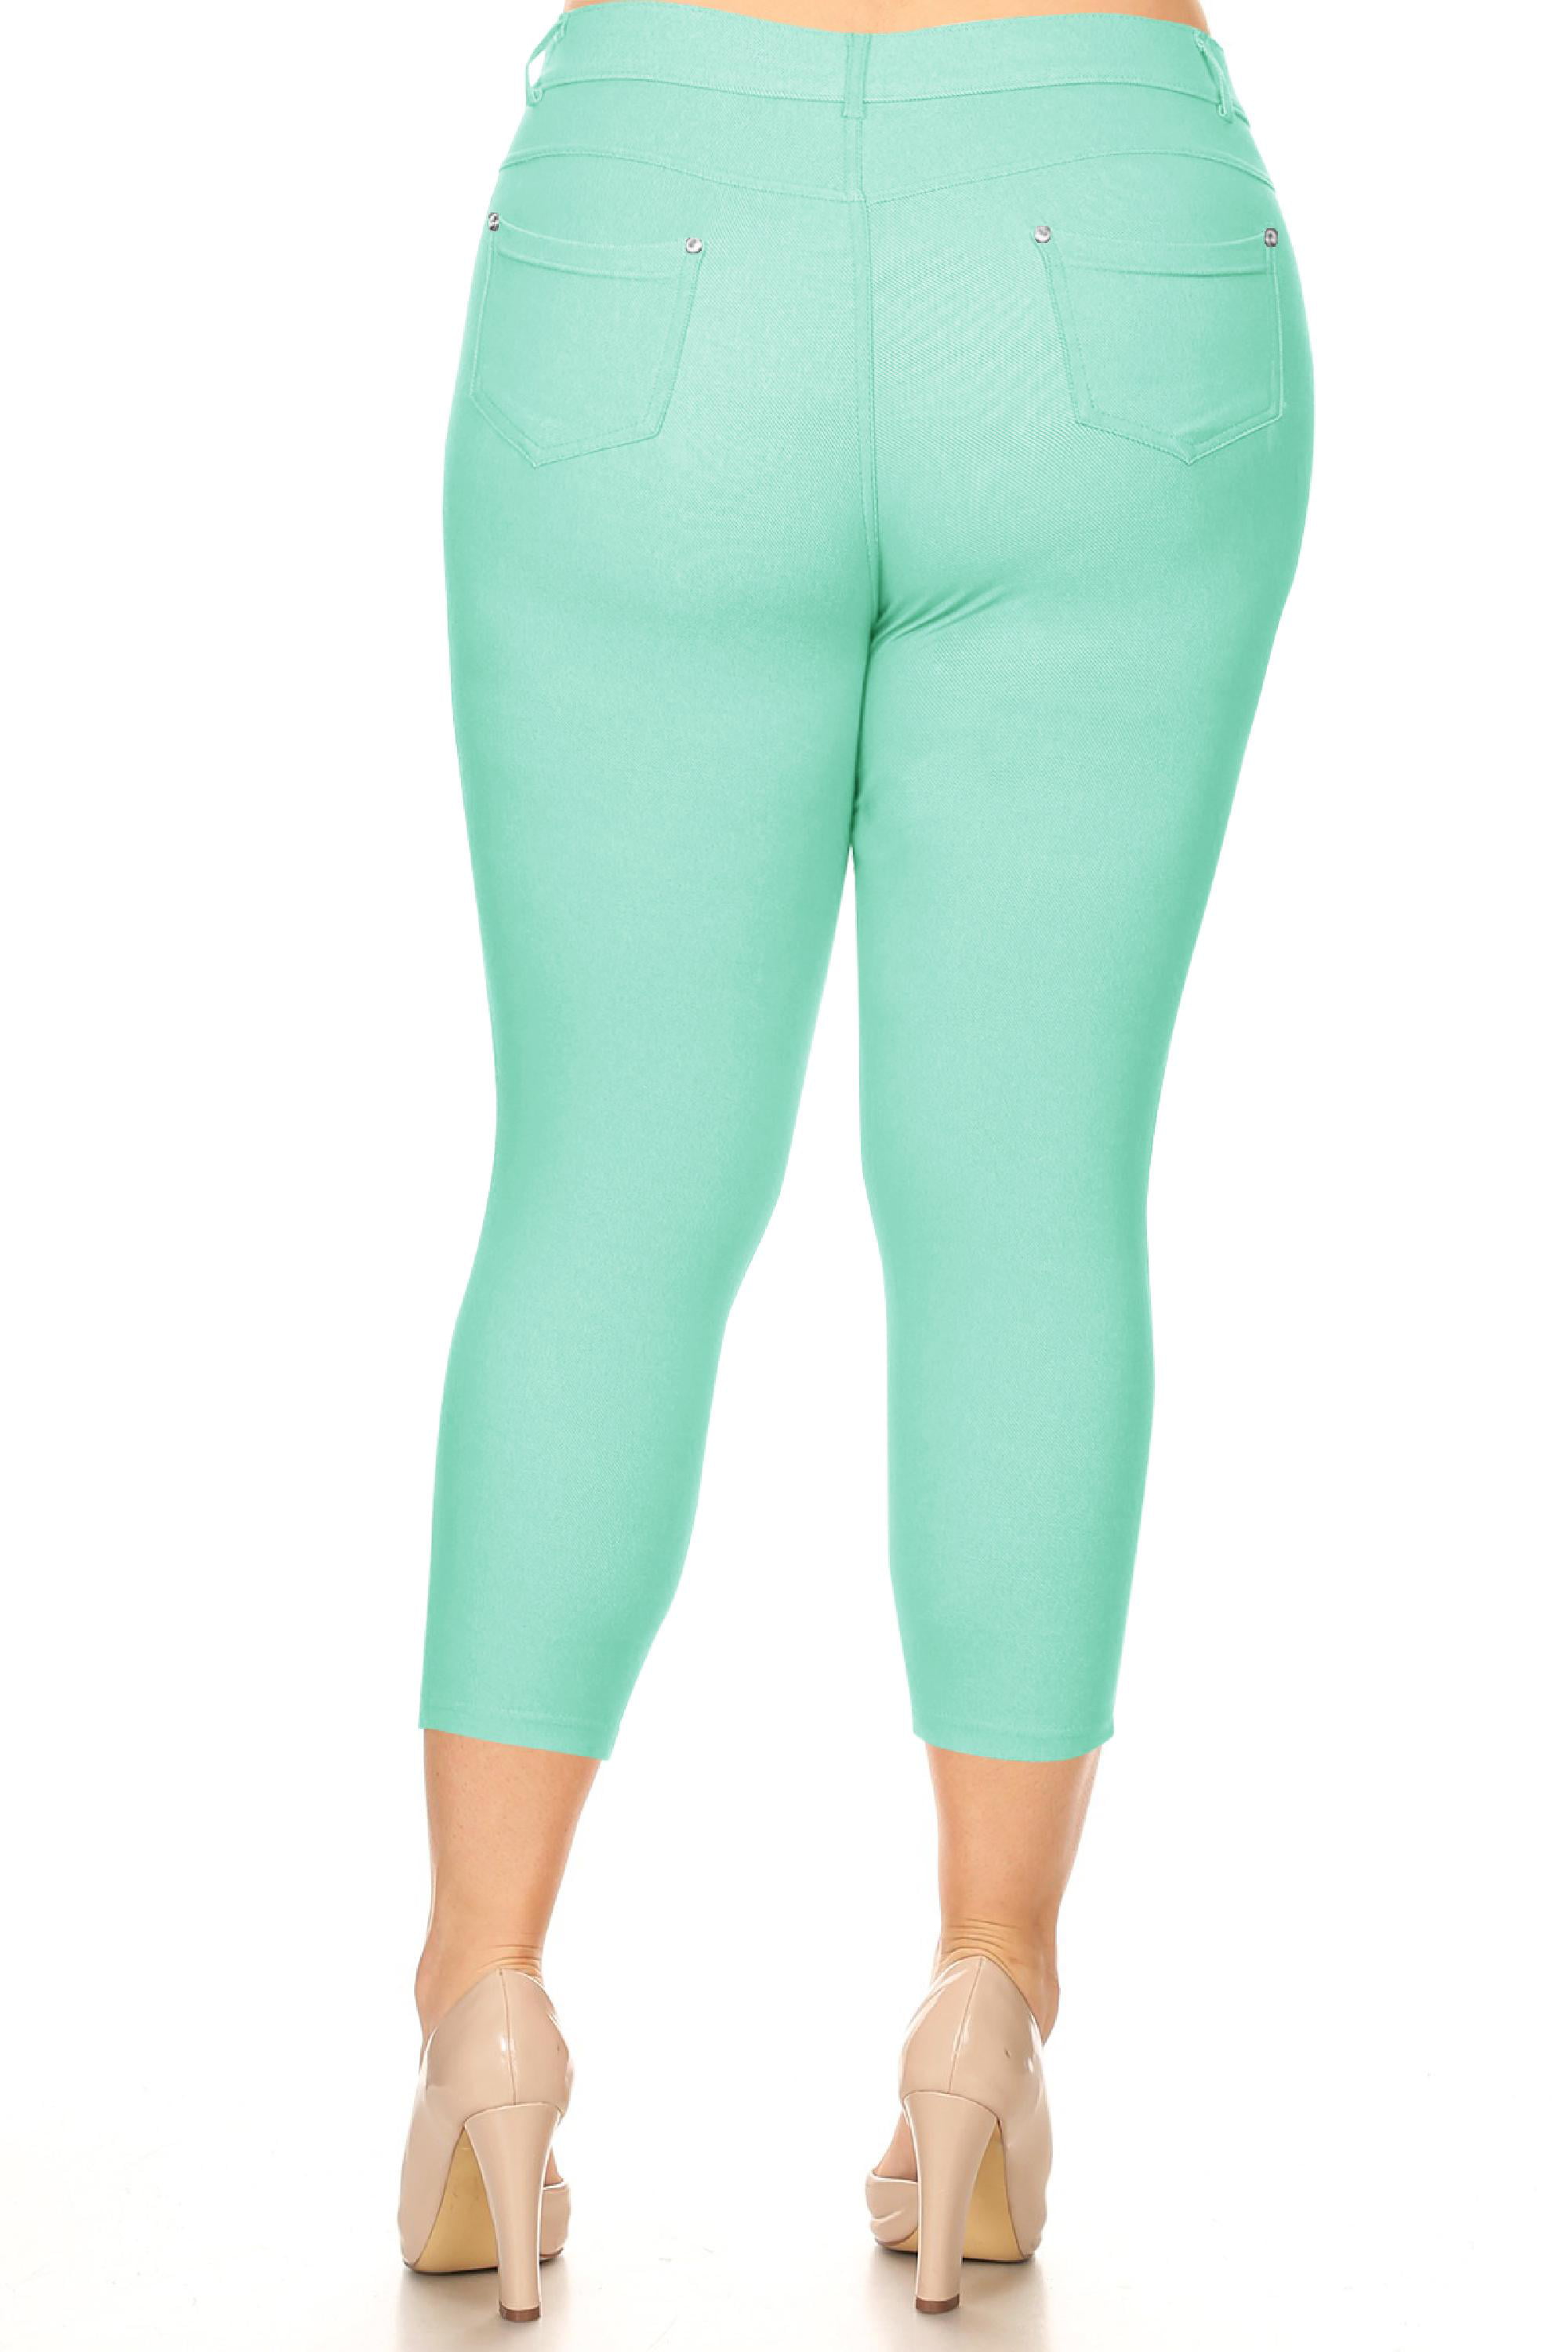 Moa Collection Women's Plus Size Cotton Blend 5-Pocket Skinny Capri  Jeggings Pant XL XXL XXXL